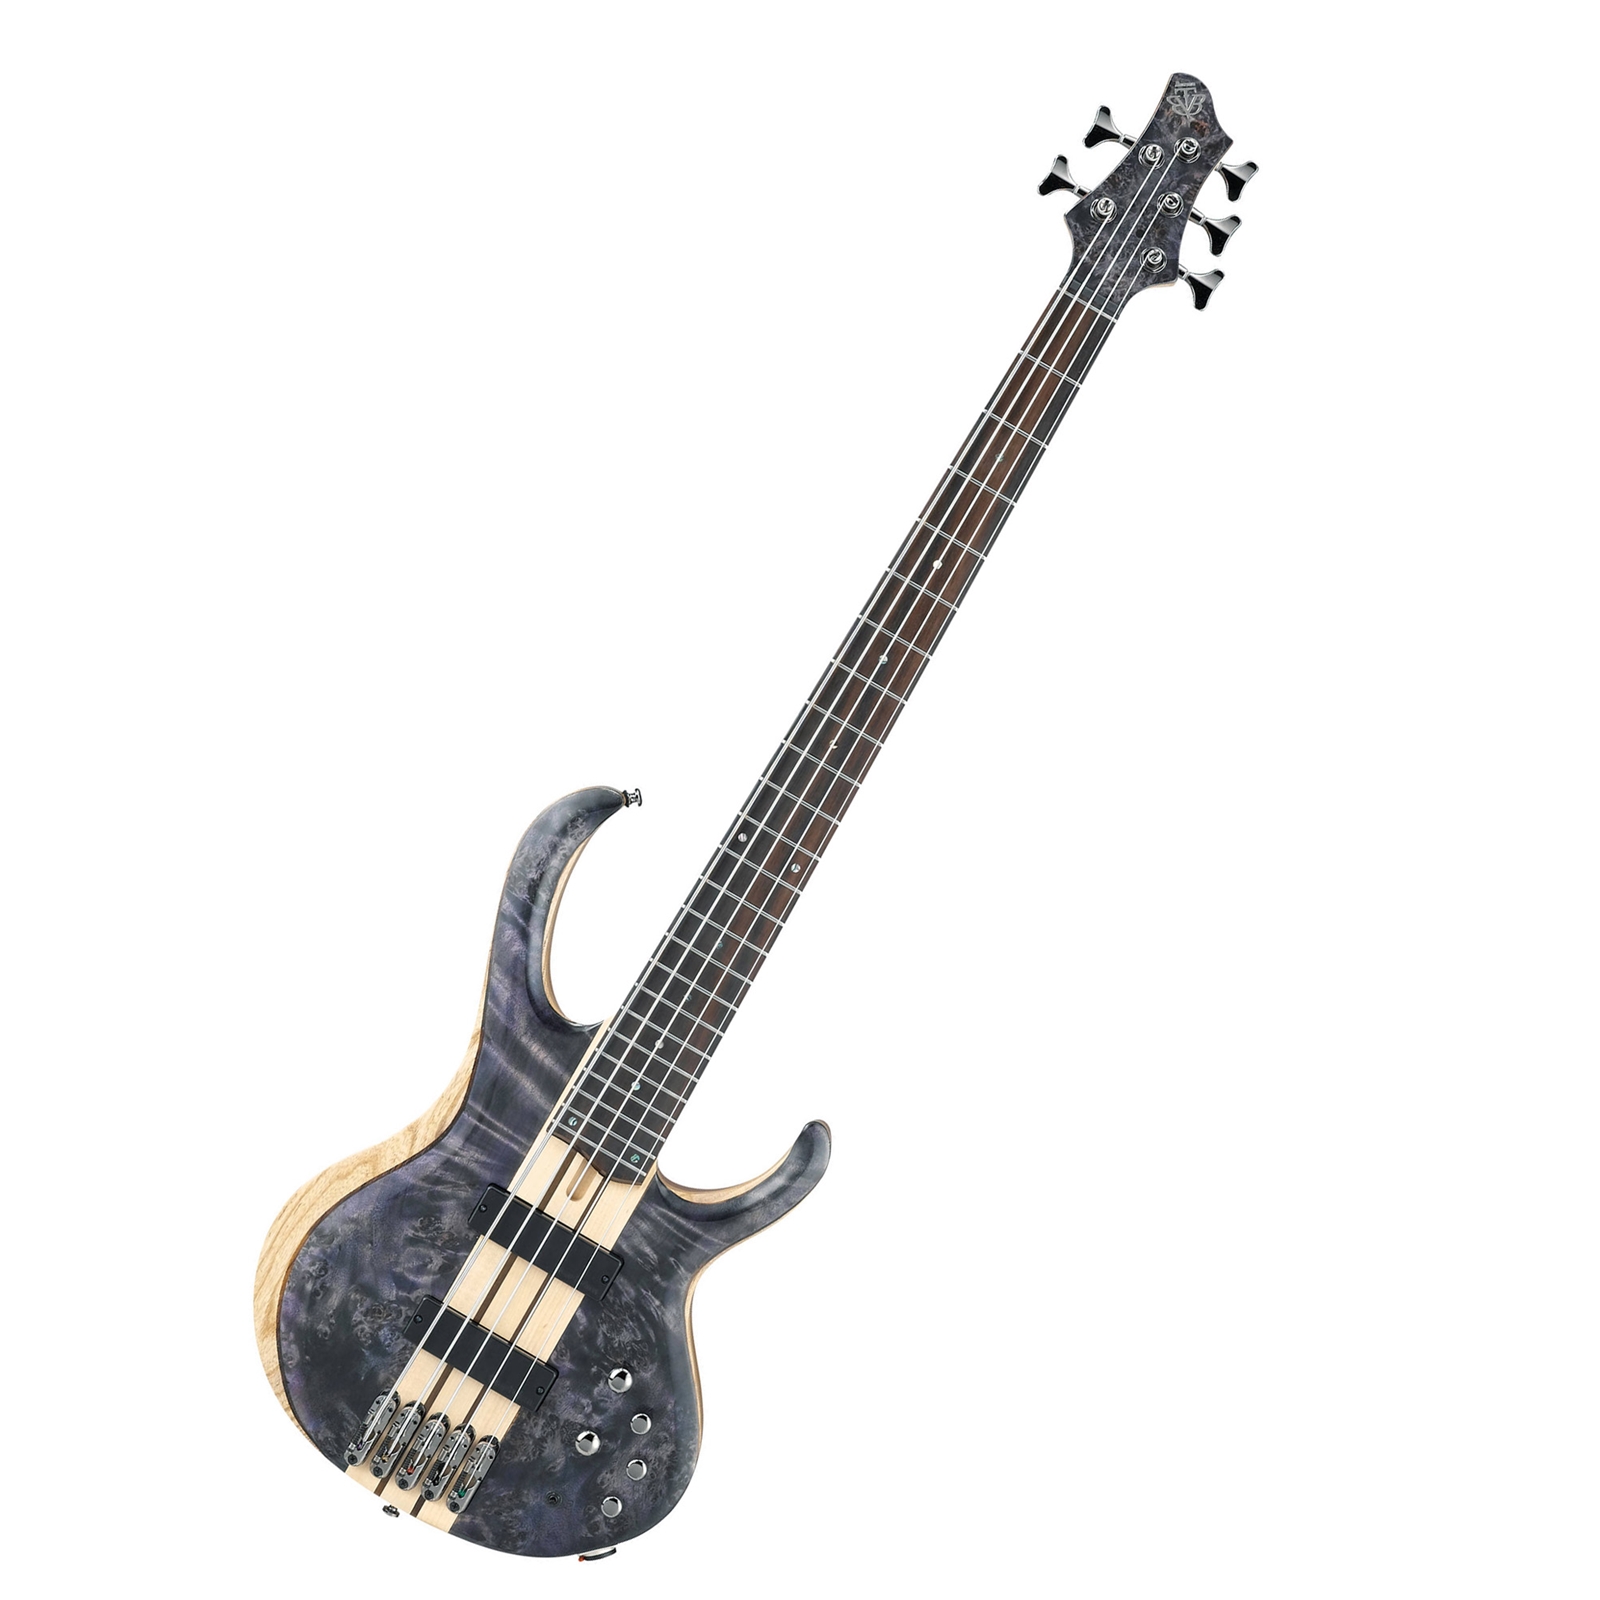 Ibanez BTB845 5-String Electric Bass Guitar